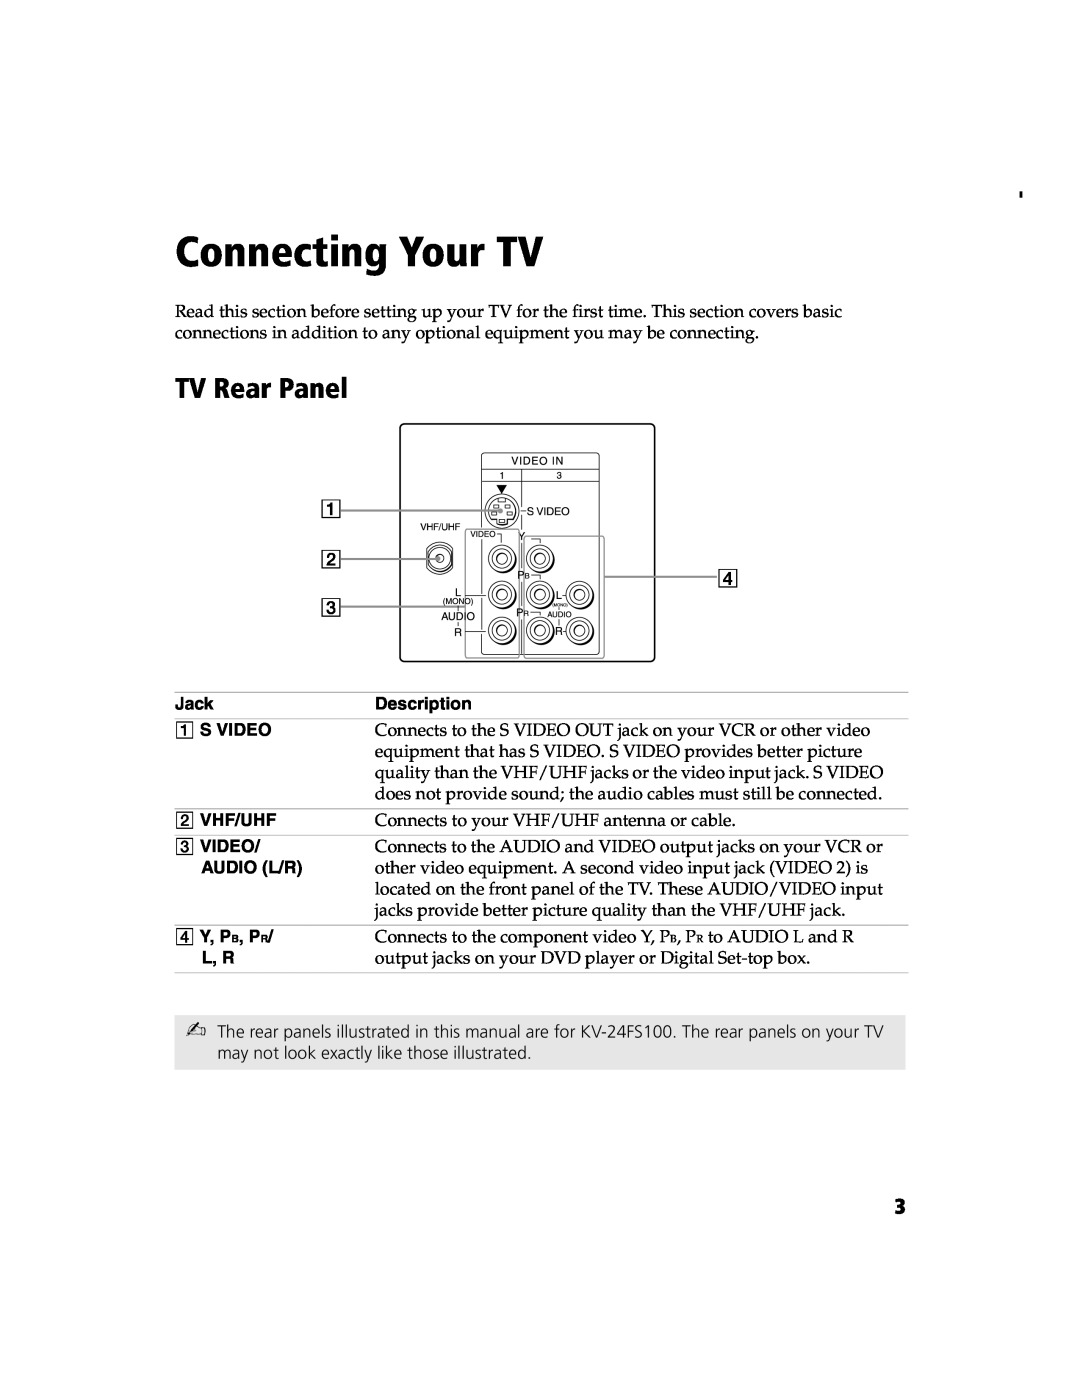 Sony KV-13FS100, KV-20FS100, KV-13FS110, KV-24FS100 operating instructions Connecting Your TV, TV Rear Panel 